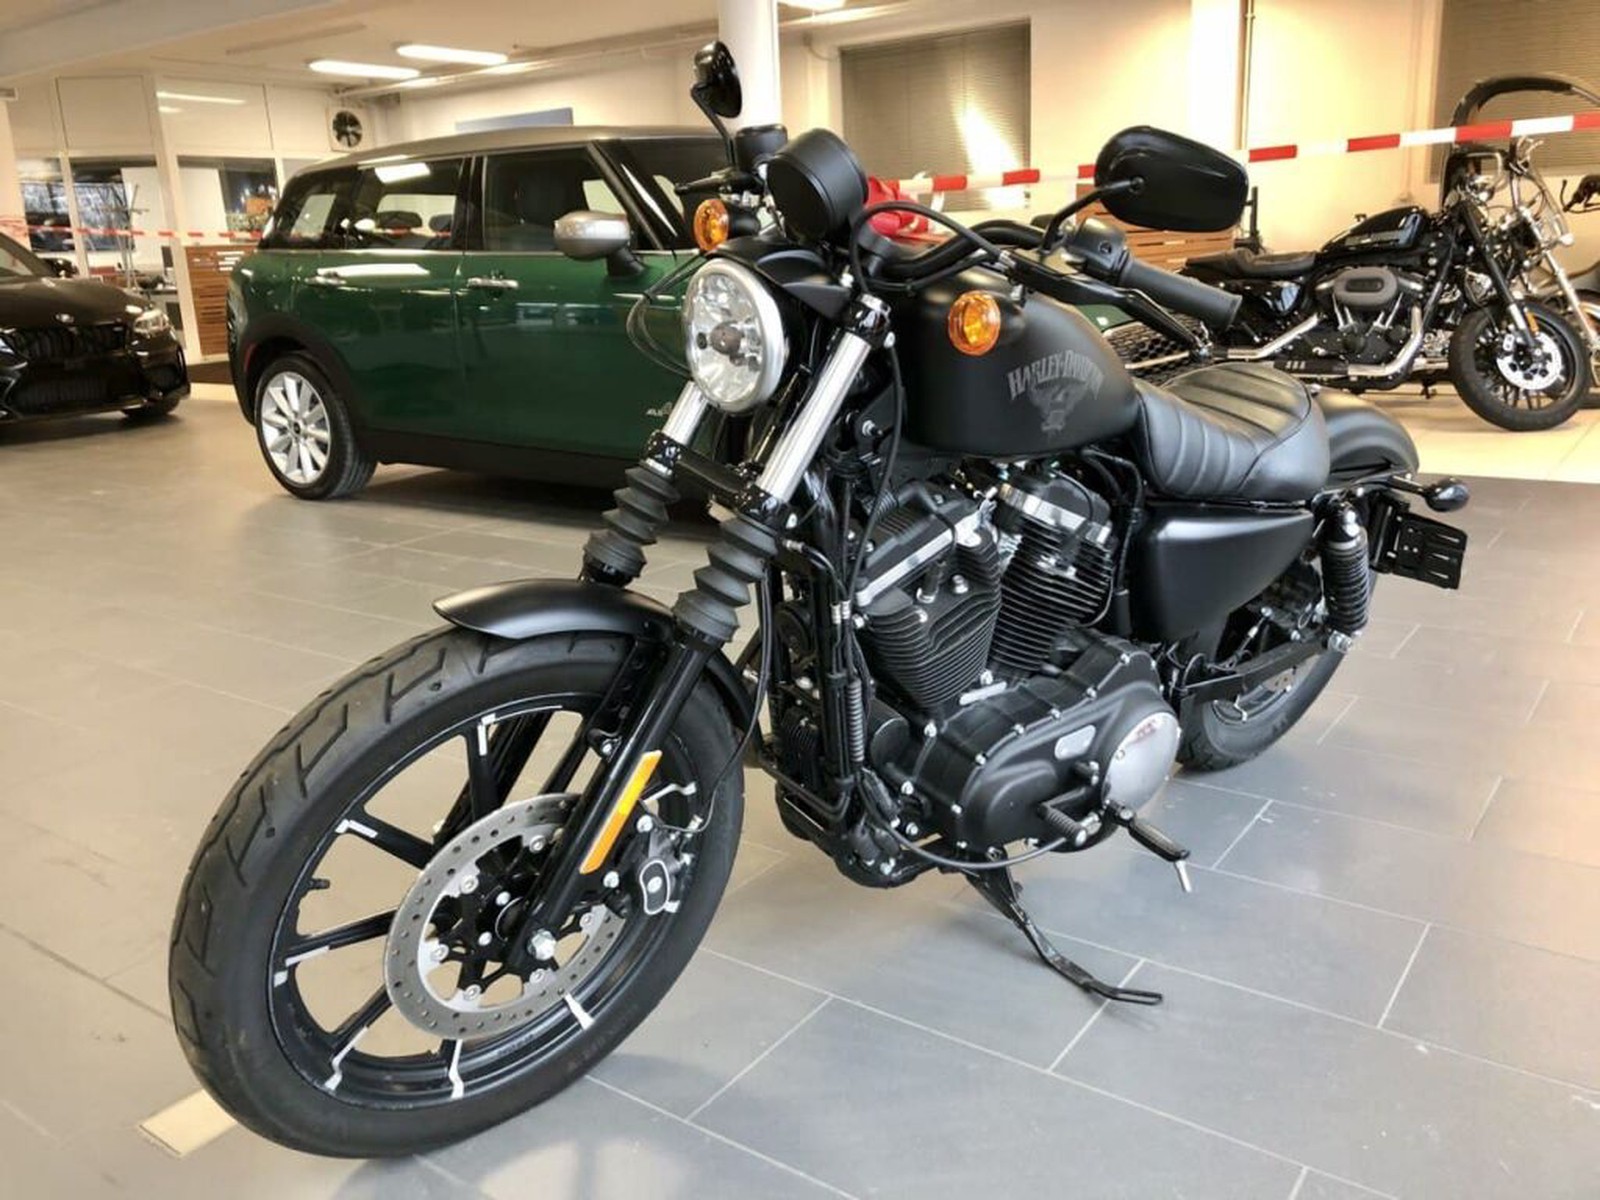 Harley Davidson Sportster Iron 883 Tax Free Military Sales In Wurzburg Price 7800 Usd Int Nr U 15611 Sold